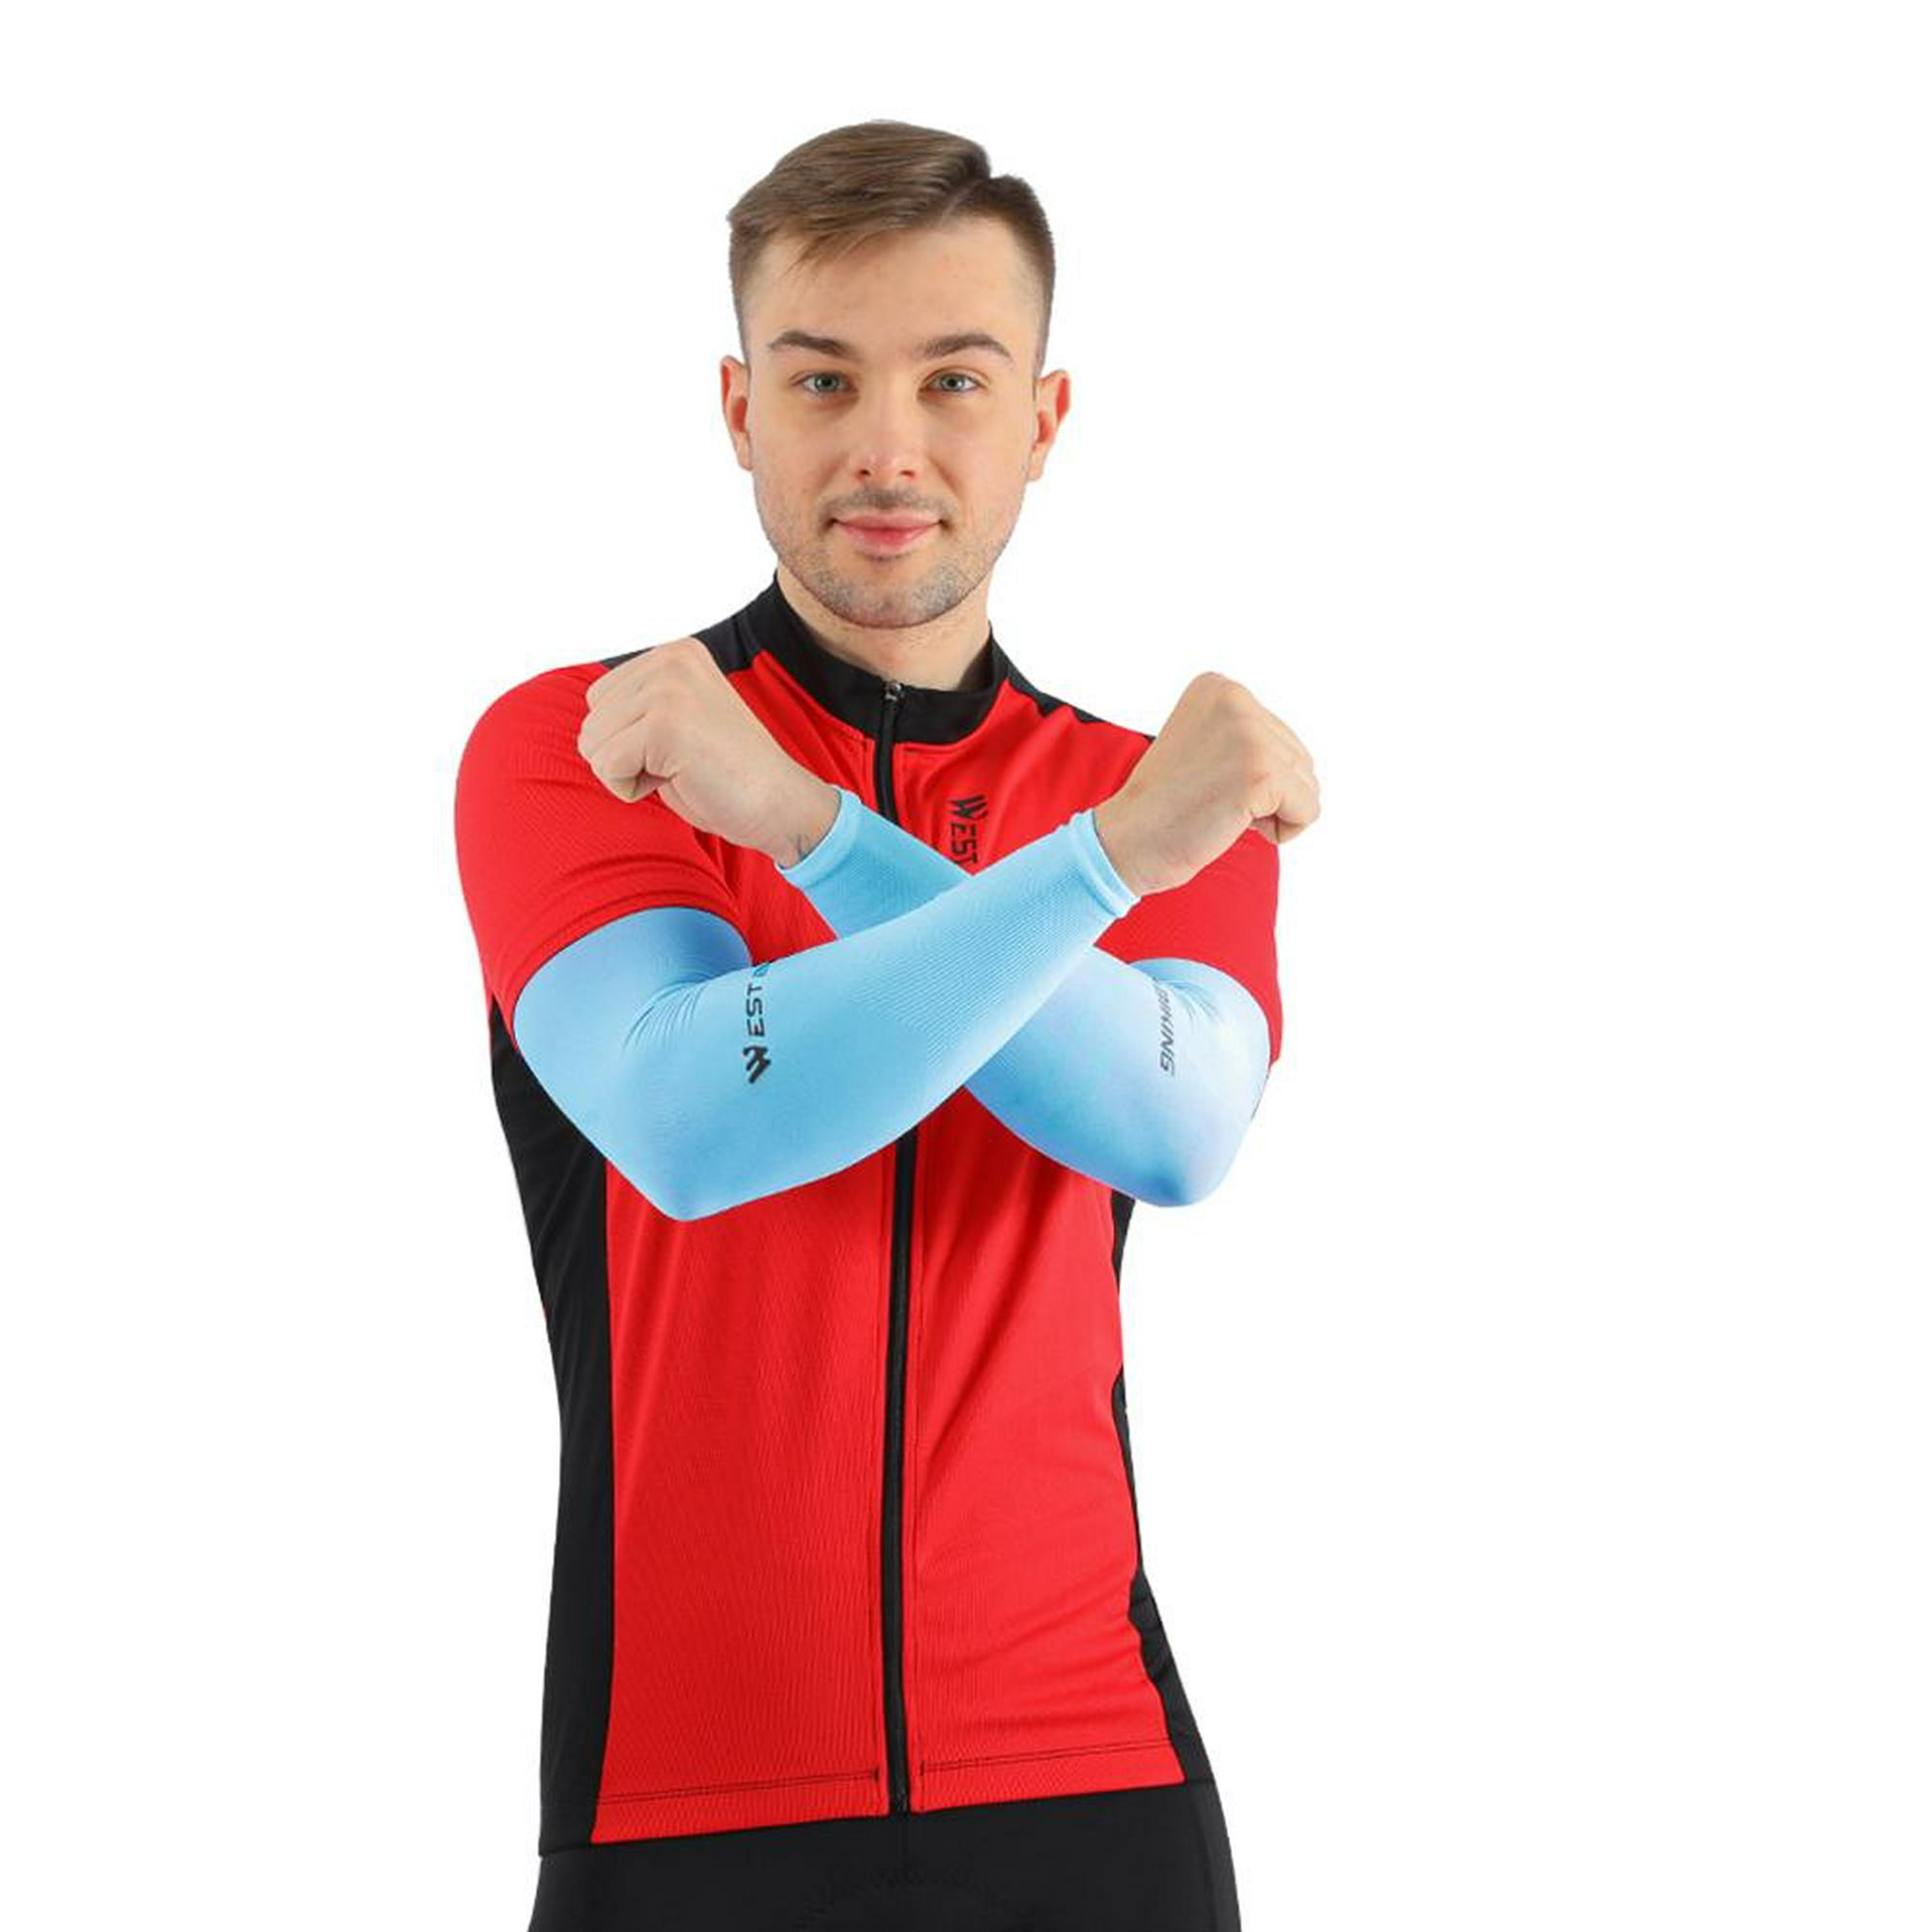 guantes de mujer para brazos manga larga protectores UV deporte trotar  gimnasio